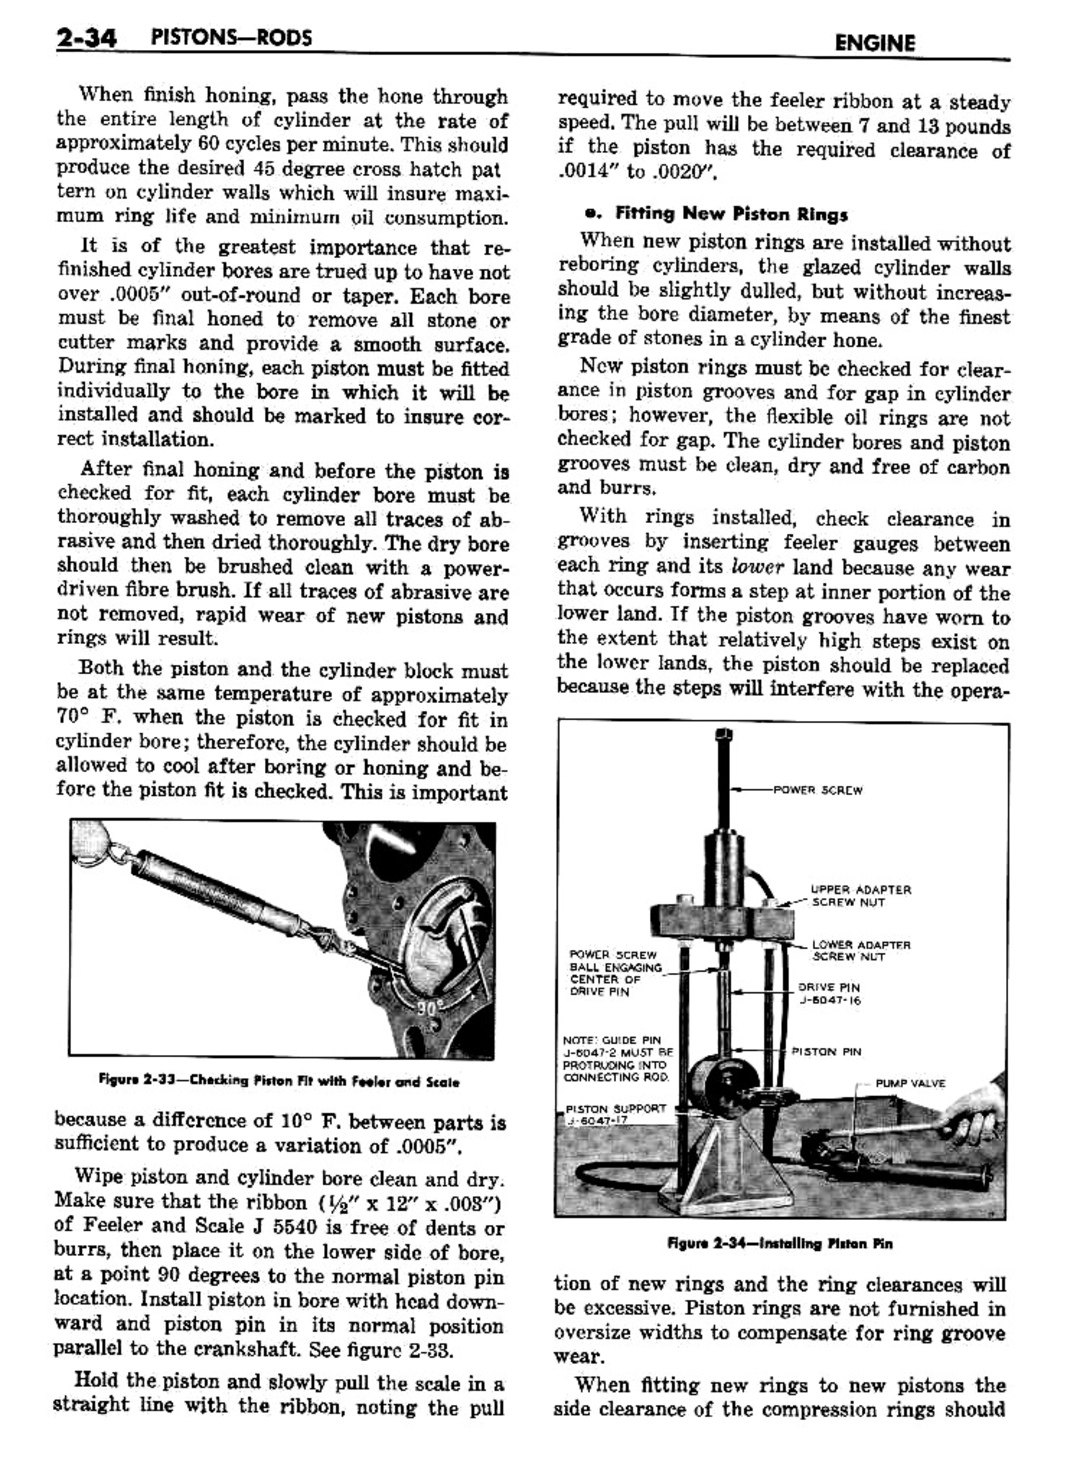 n_03 1957 Buick Shop Manual - Engine-034-034.jpg